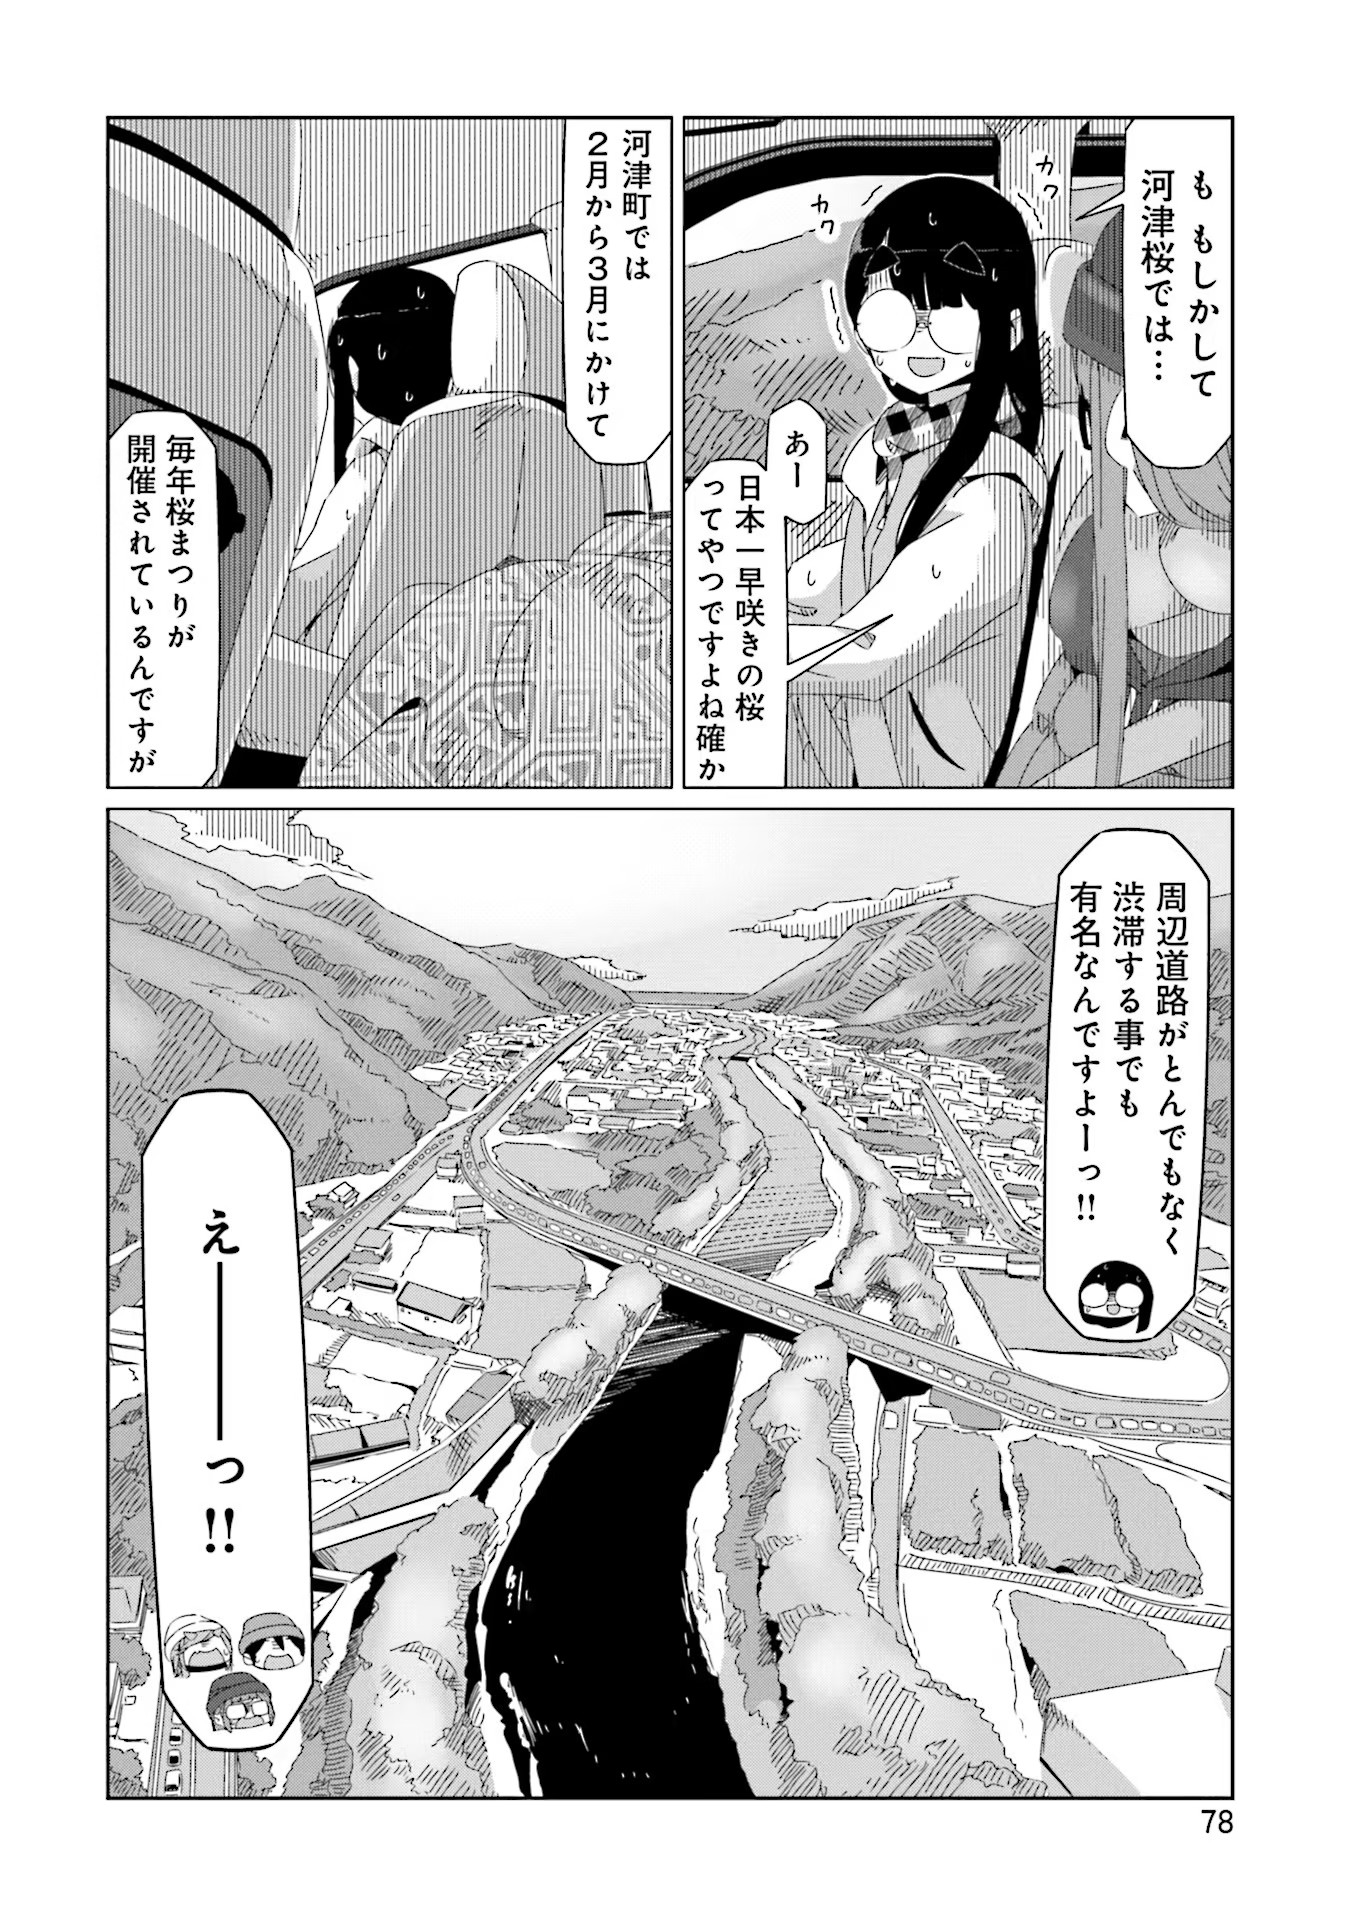 Yuru Camp - Chapter 43 - Page 24